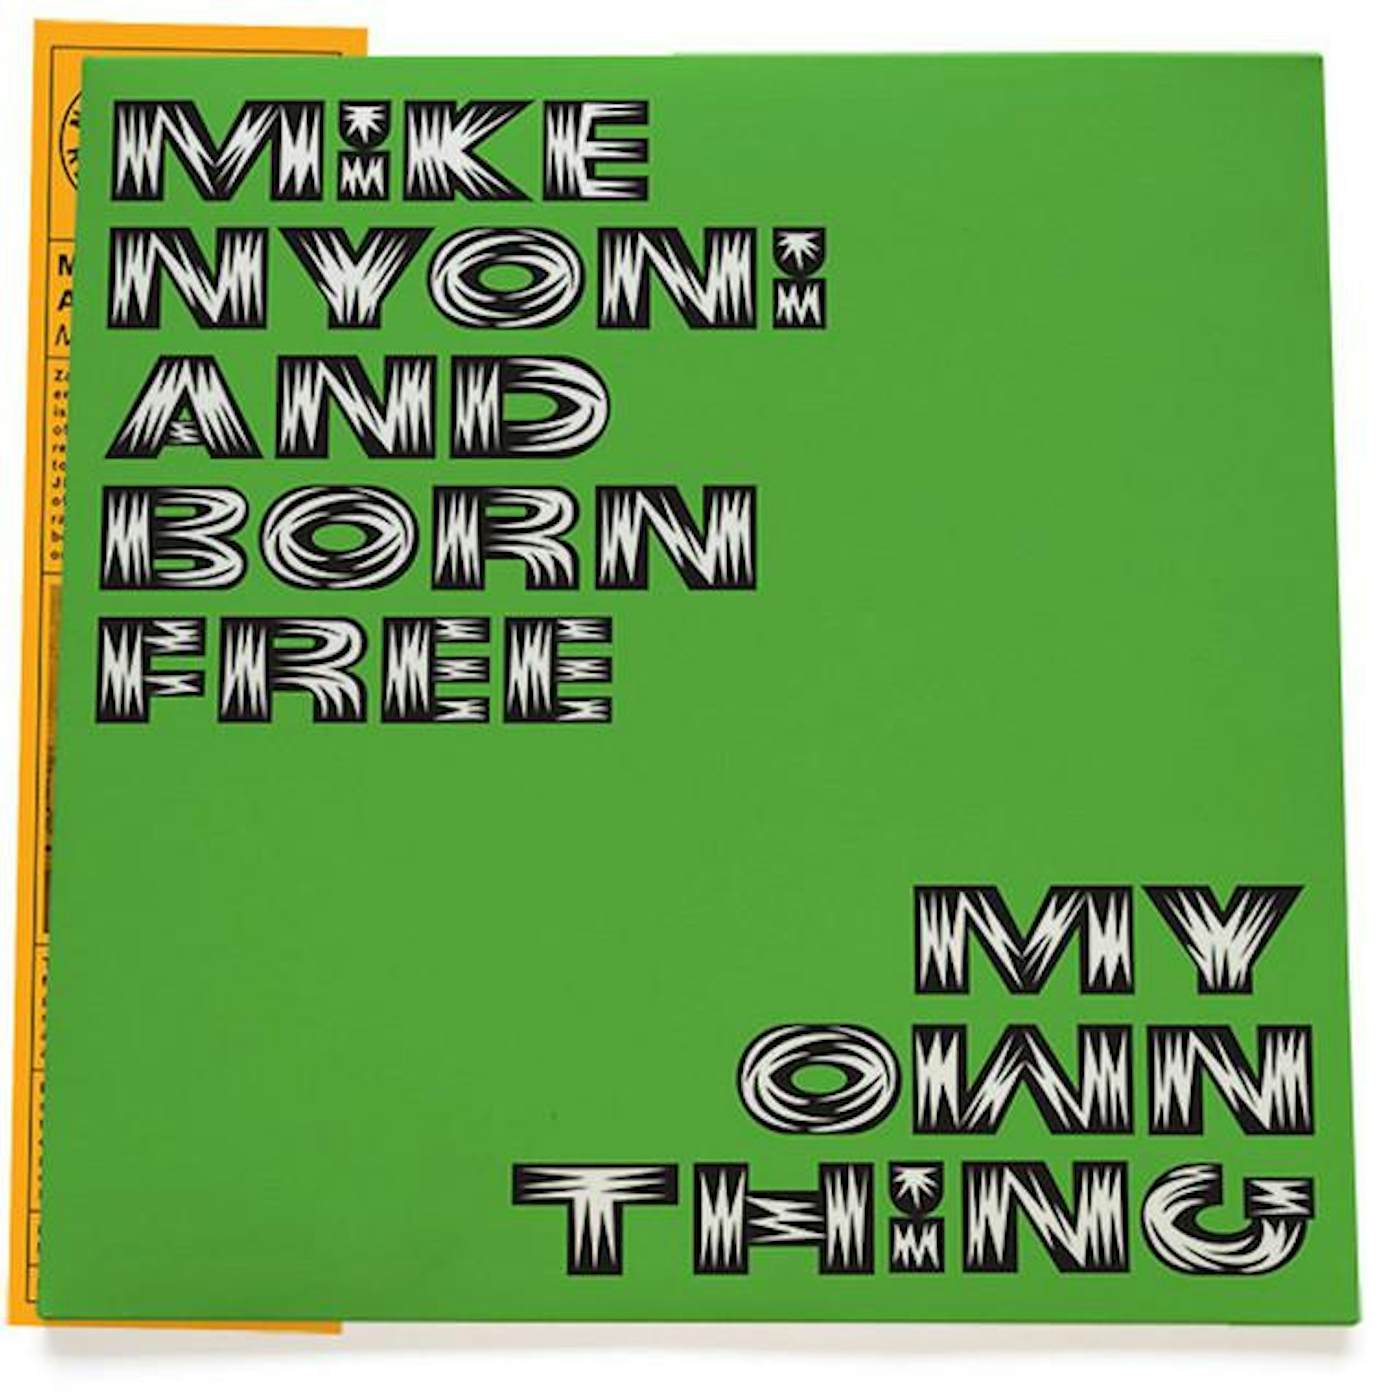 Mike Nyoni and Born Free